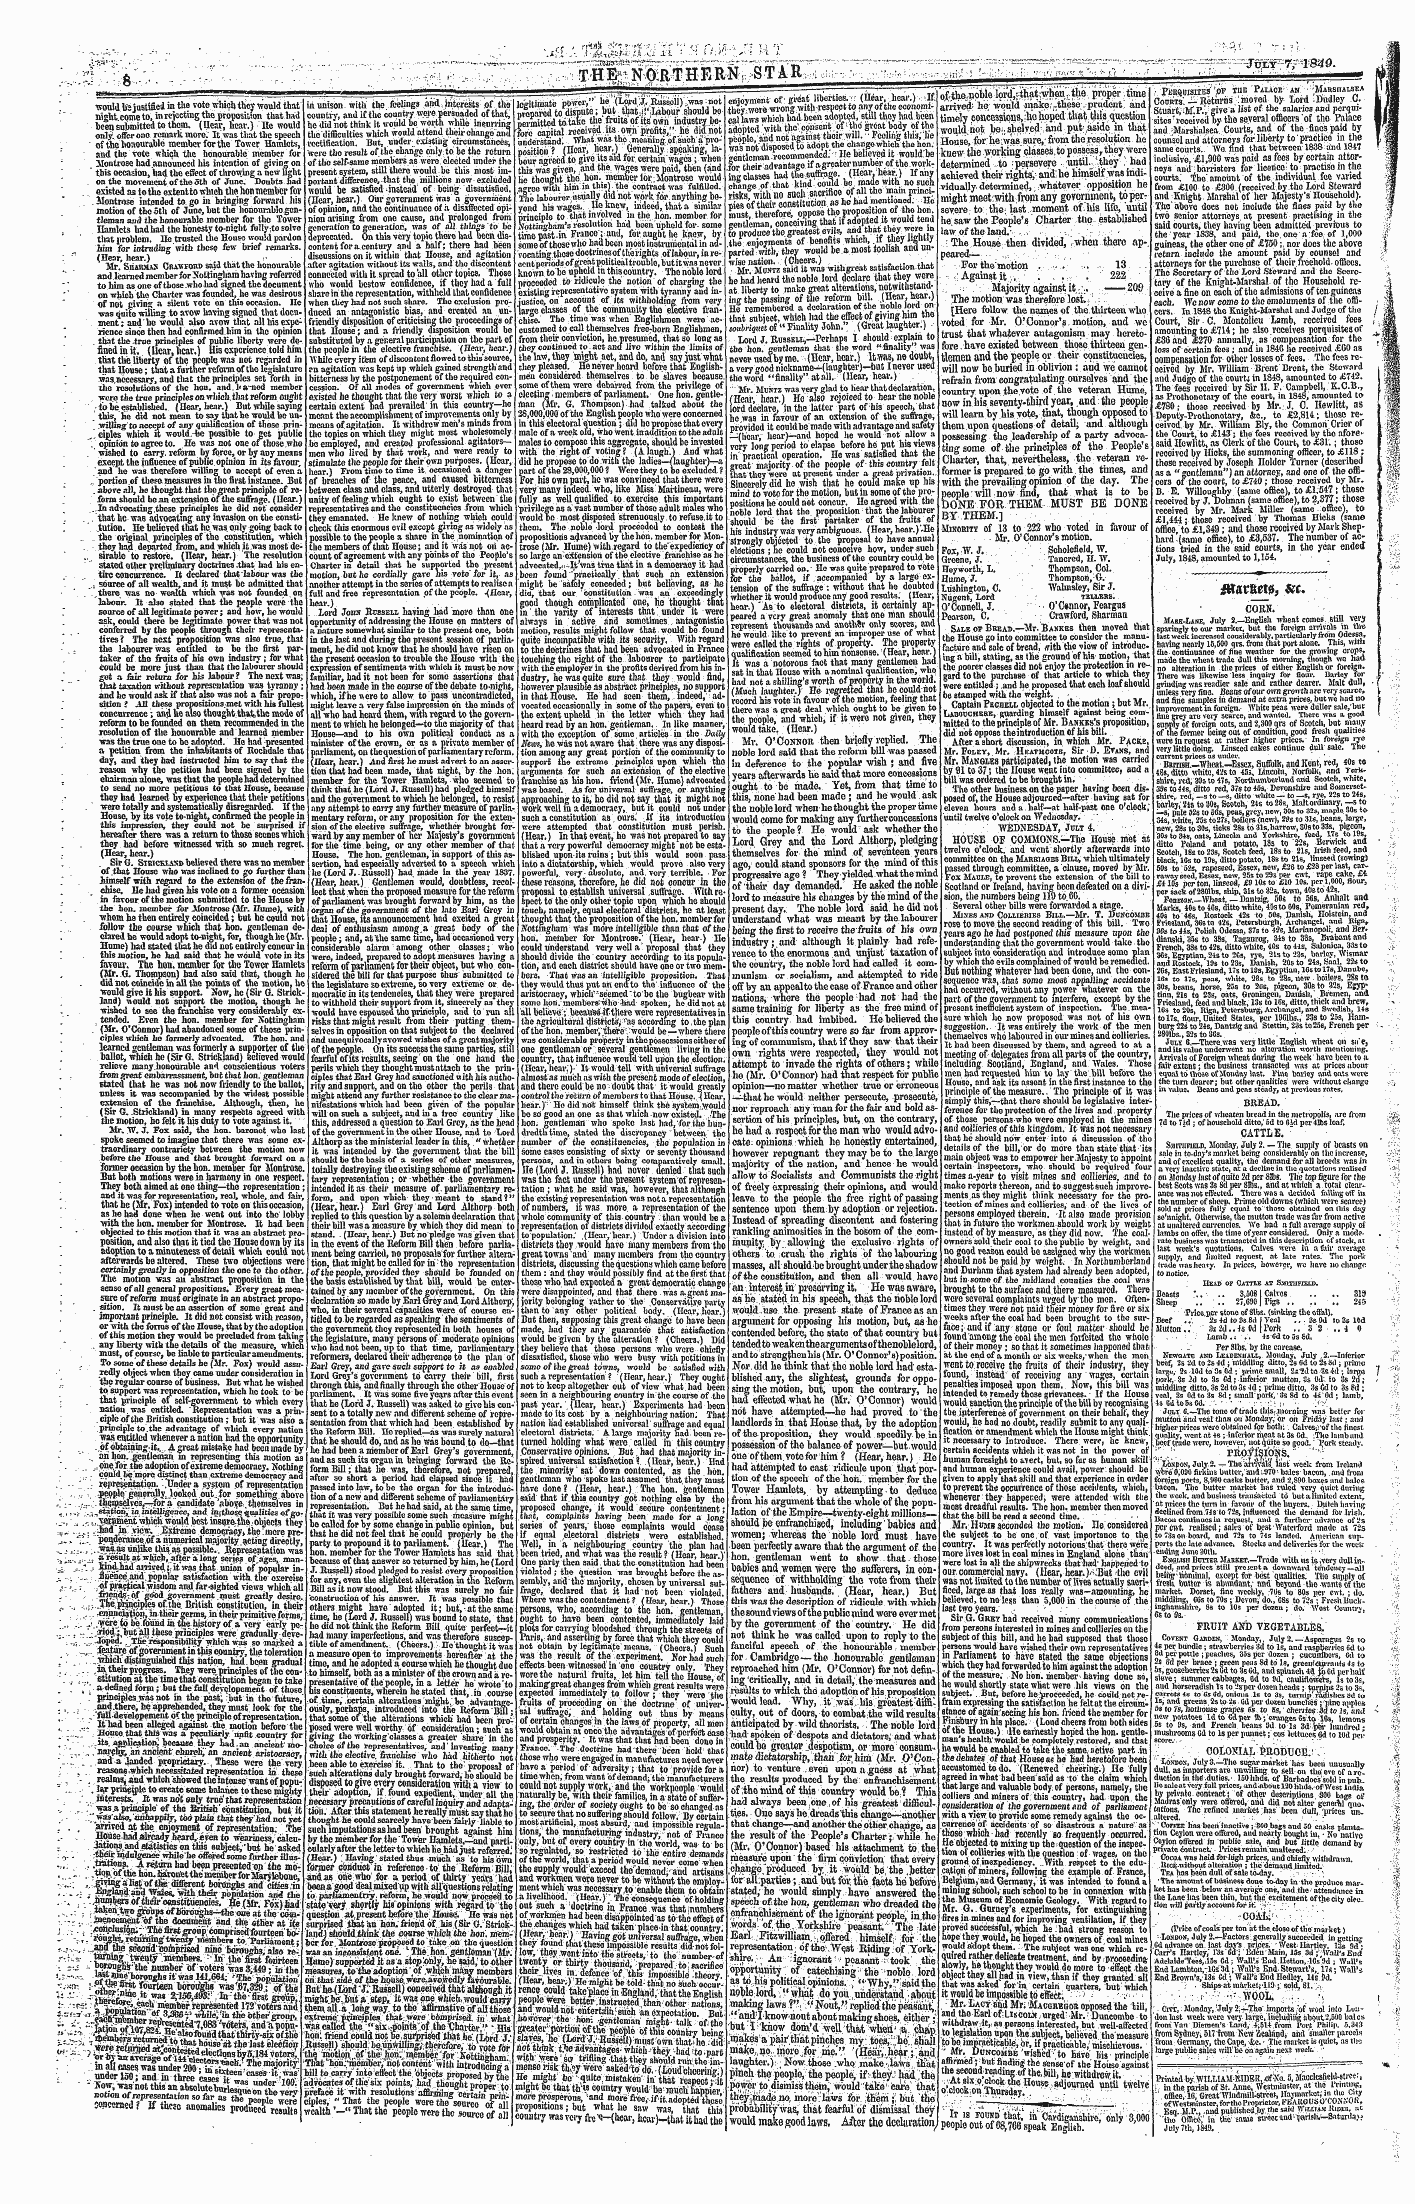 Northern Star (1837-1852): jS F Y, 3rd edition - I Printed Bviwilliam-Mder.^F-No. 5, Macclesfiehl-Strce * ,